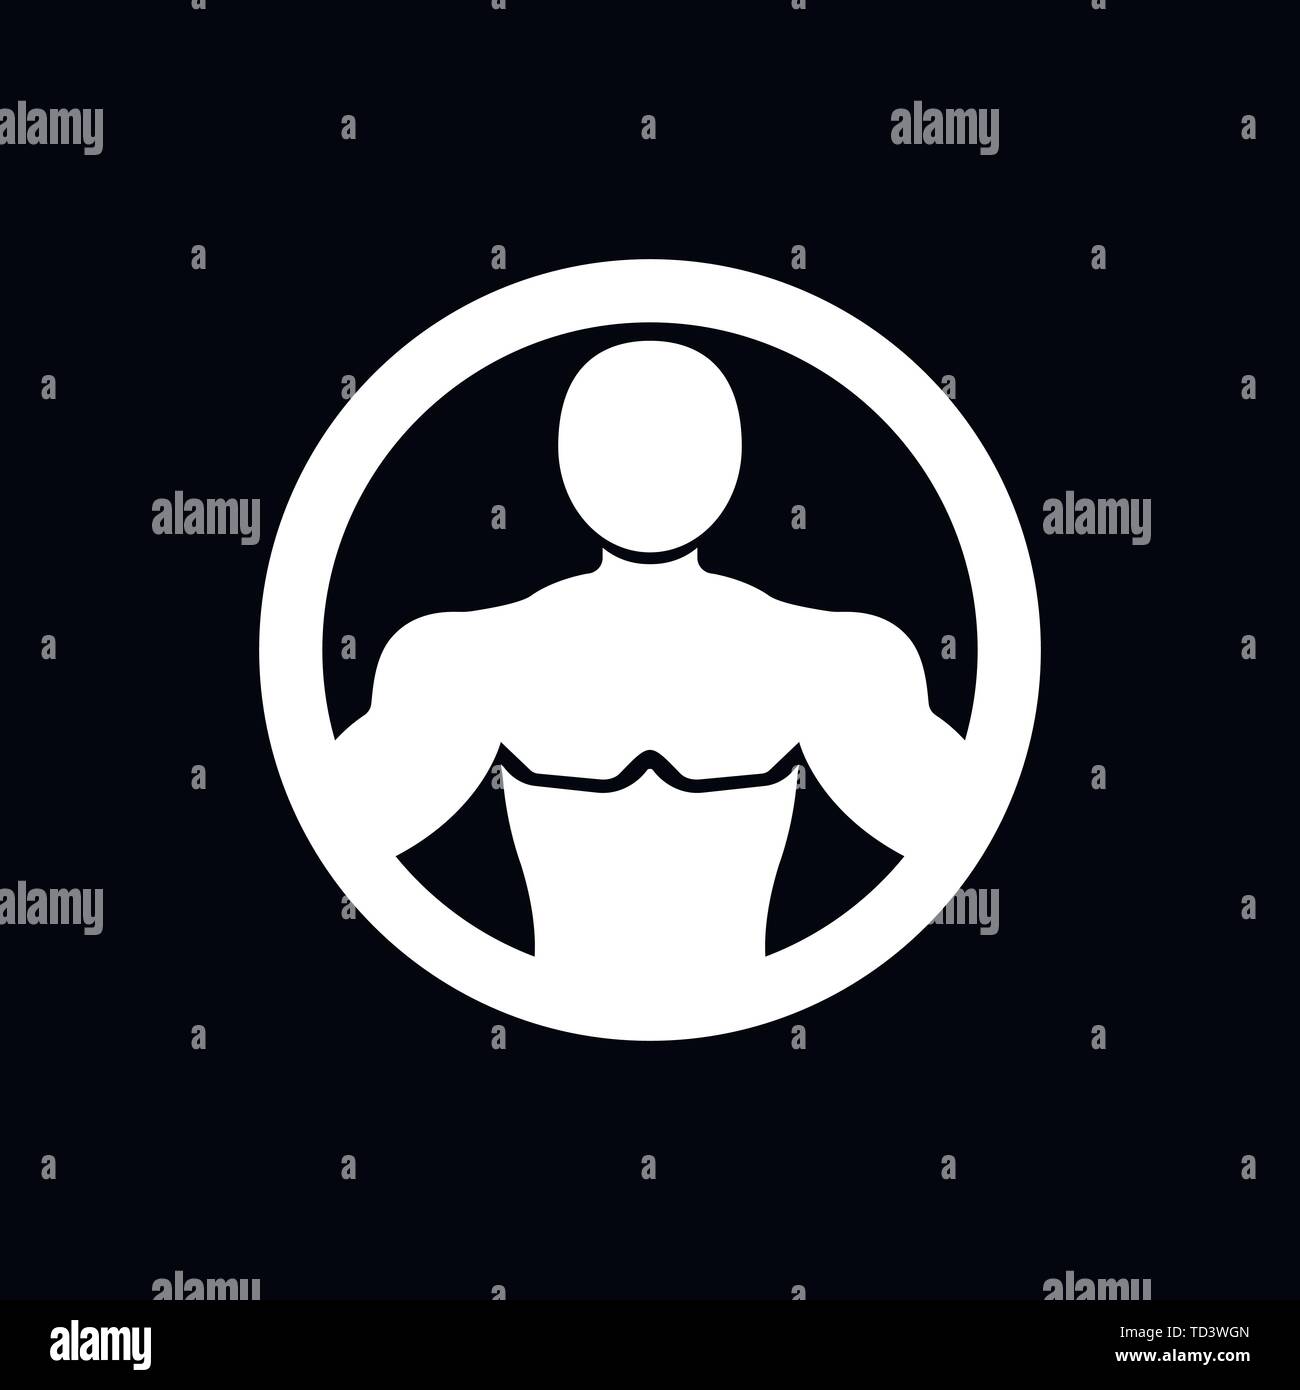 Bodybuilder Icon Muscle Sign Vector Illustration For Web Design Banner Or Print Poster Stock 6305